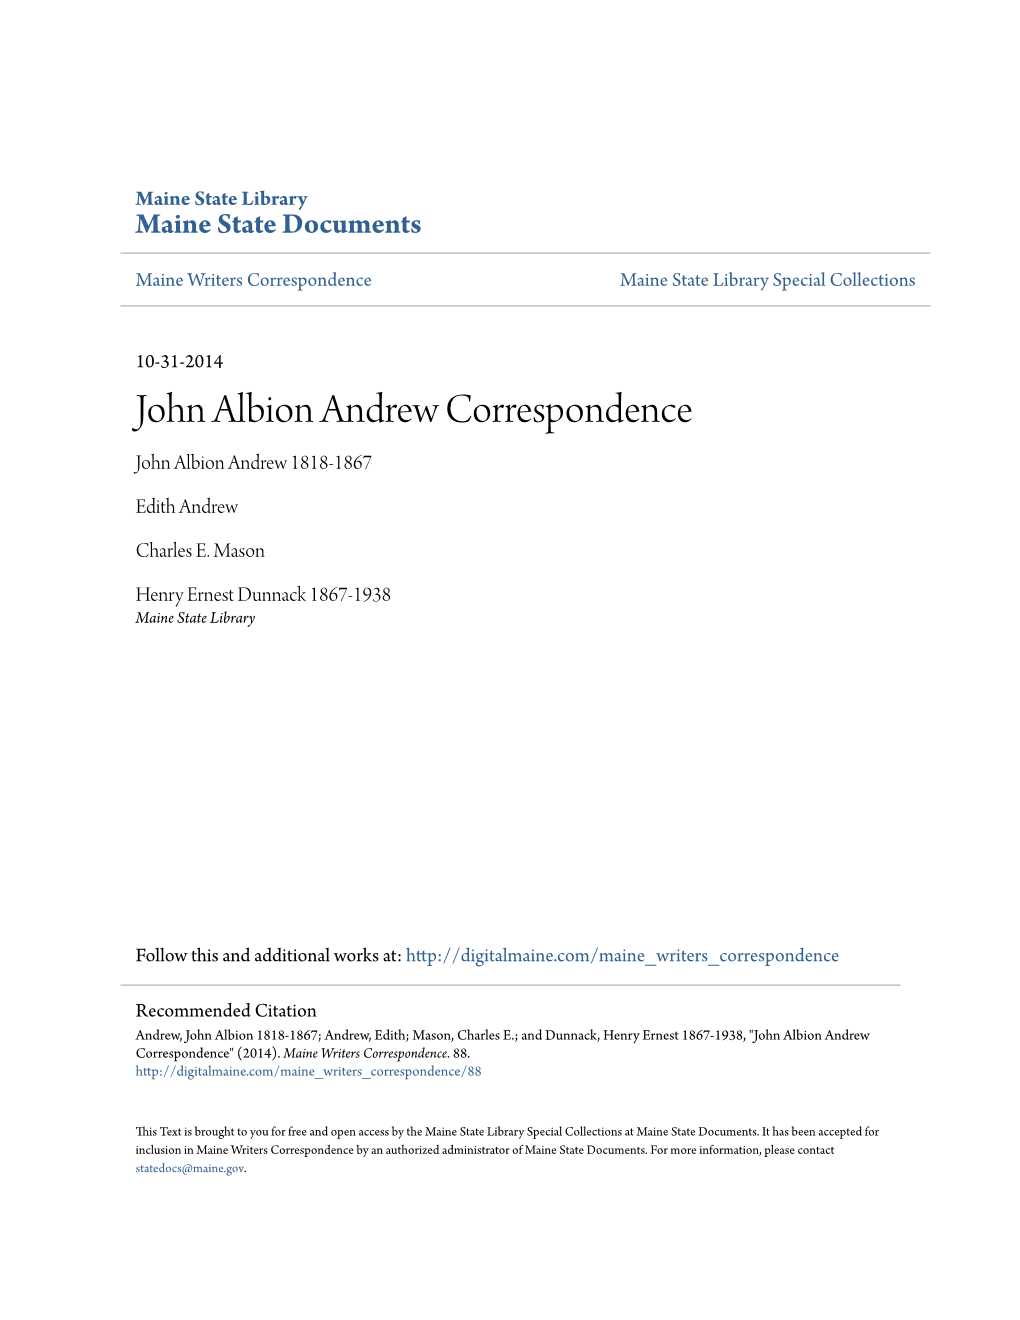 John Albion Andrew Correspondence John Albion Andrew 1818-1867